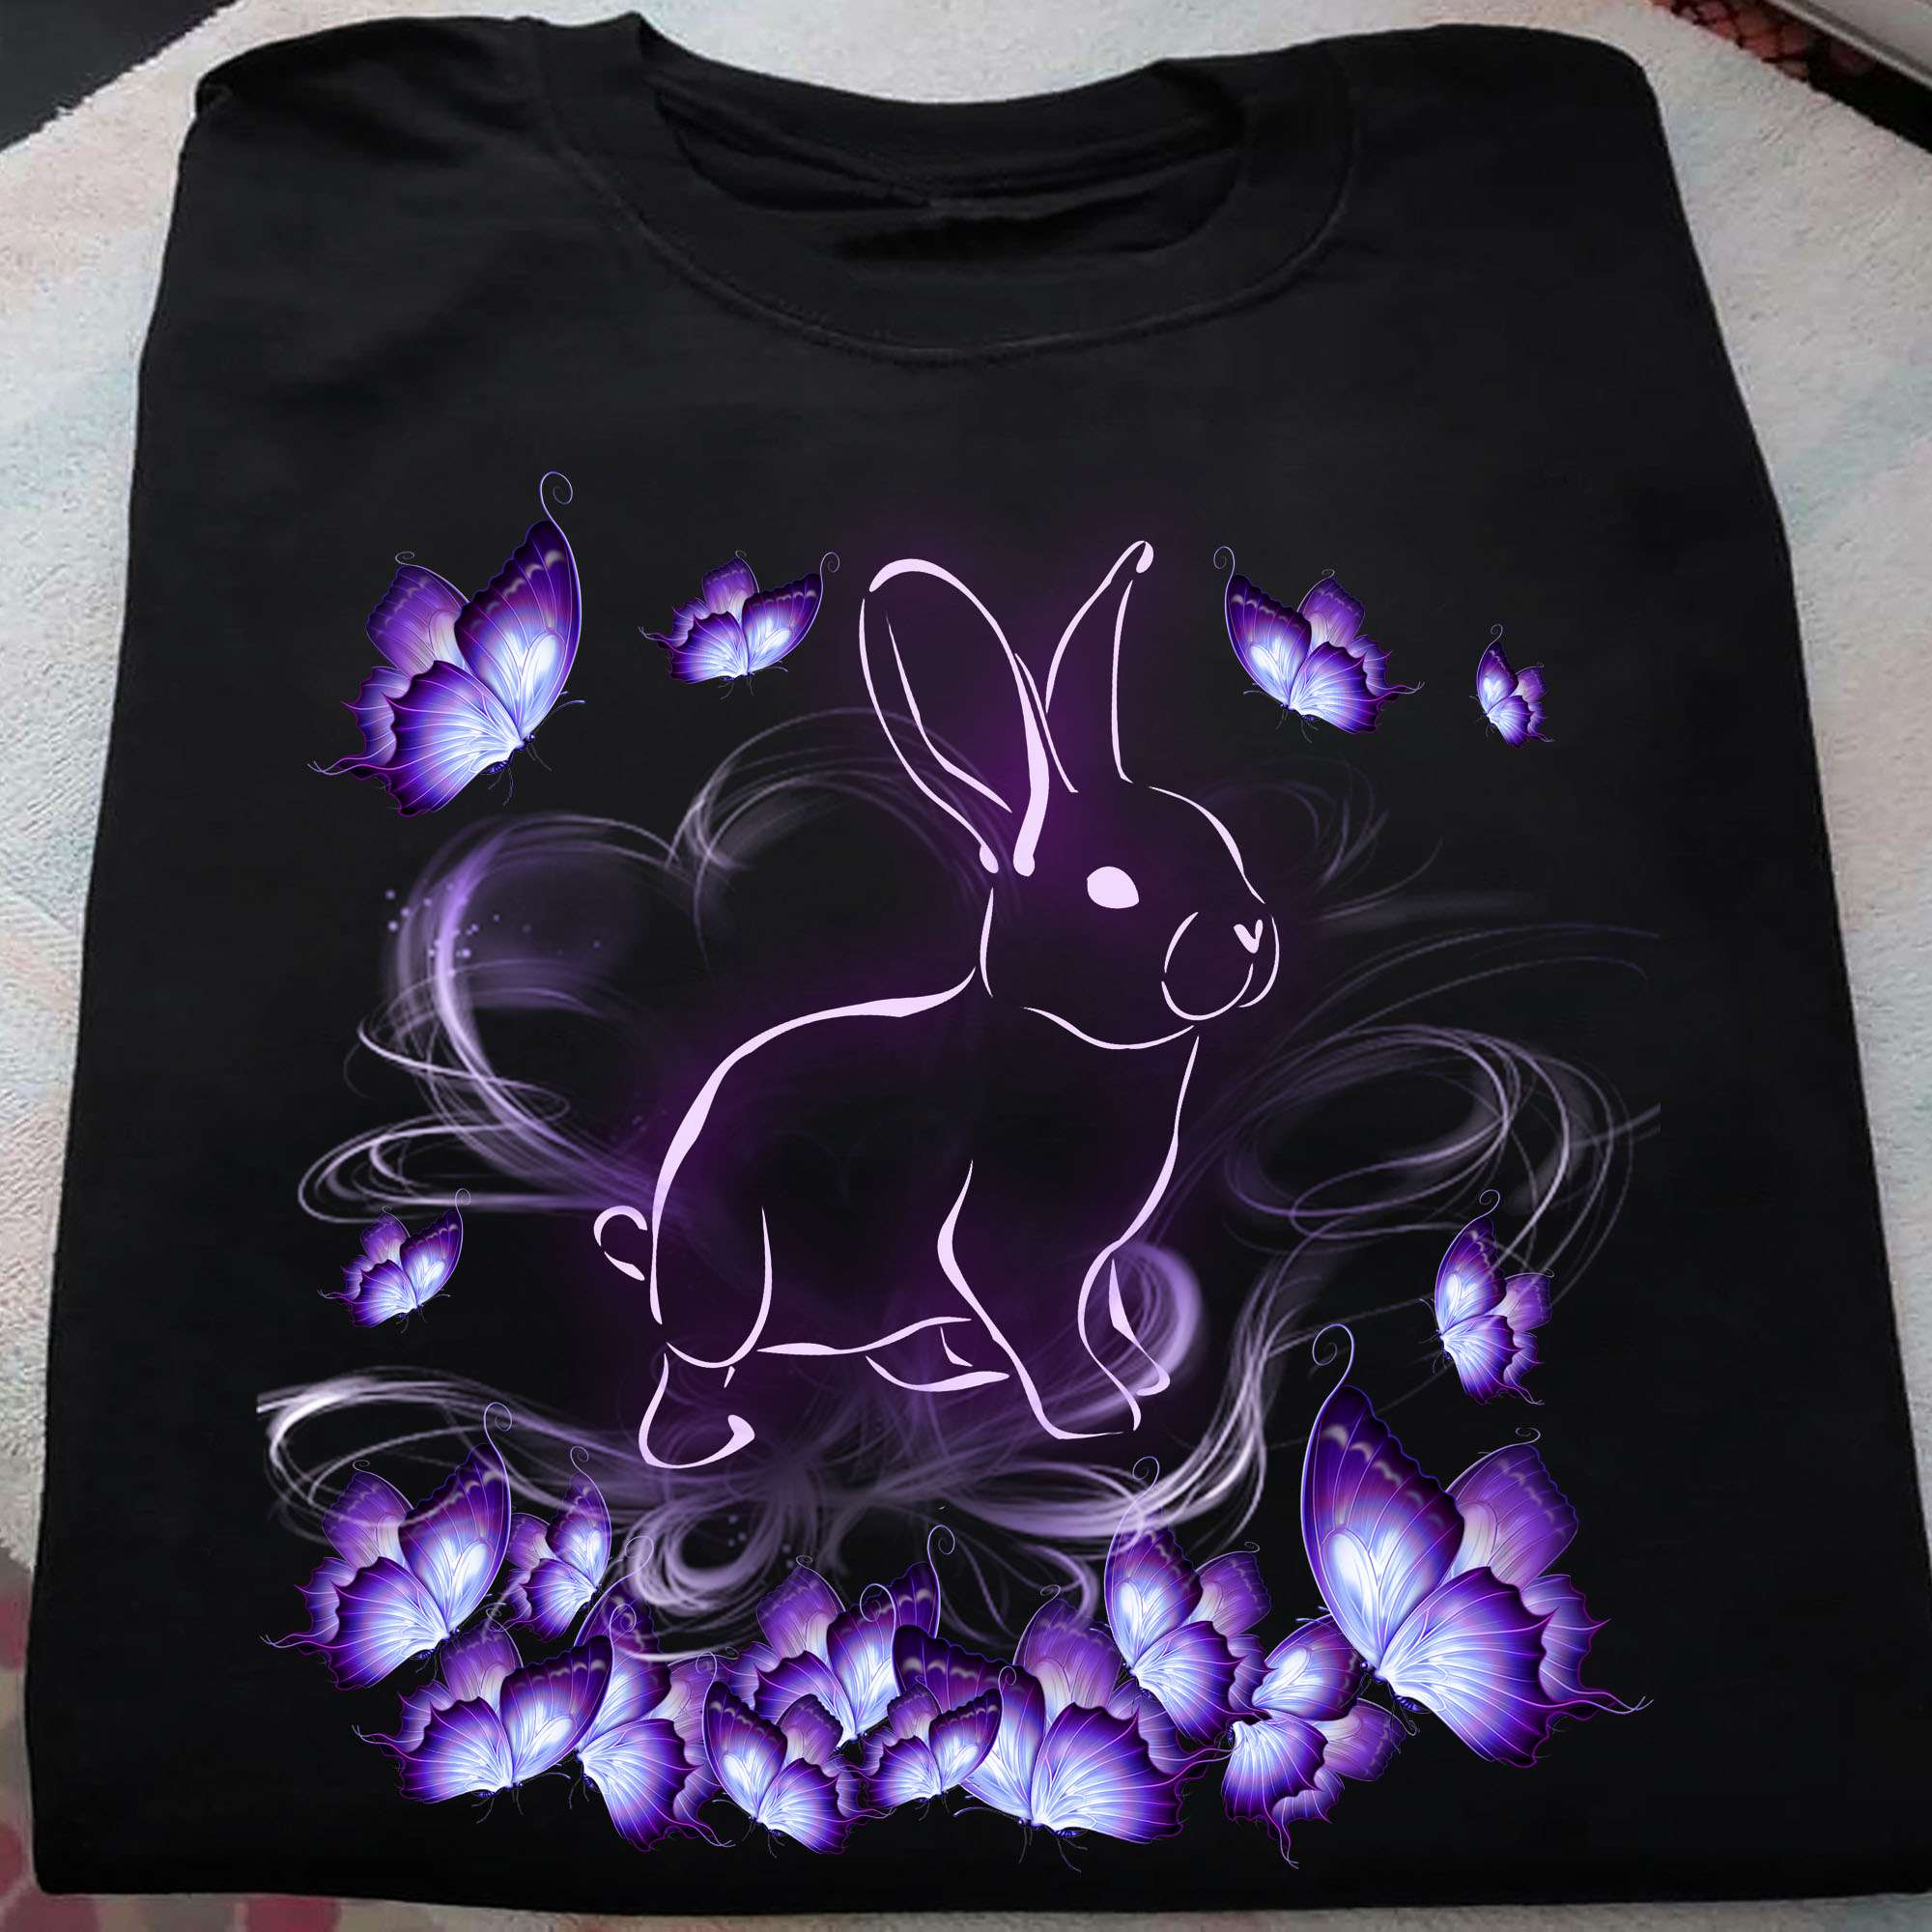 Rabbit and butterflies - Rabbit lover, animal lover